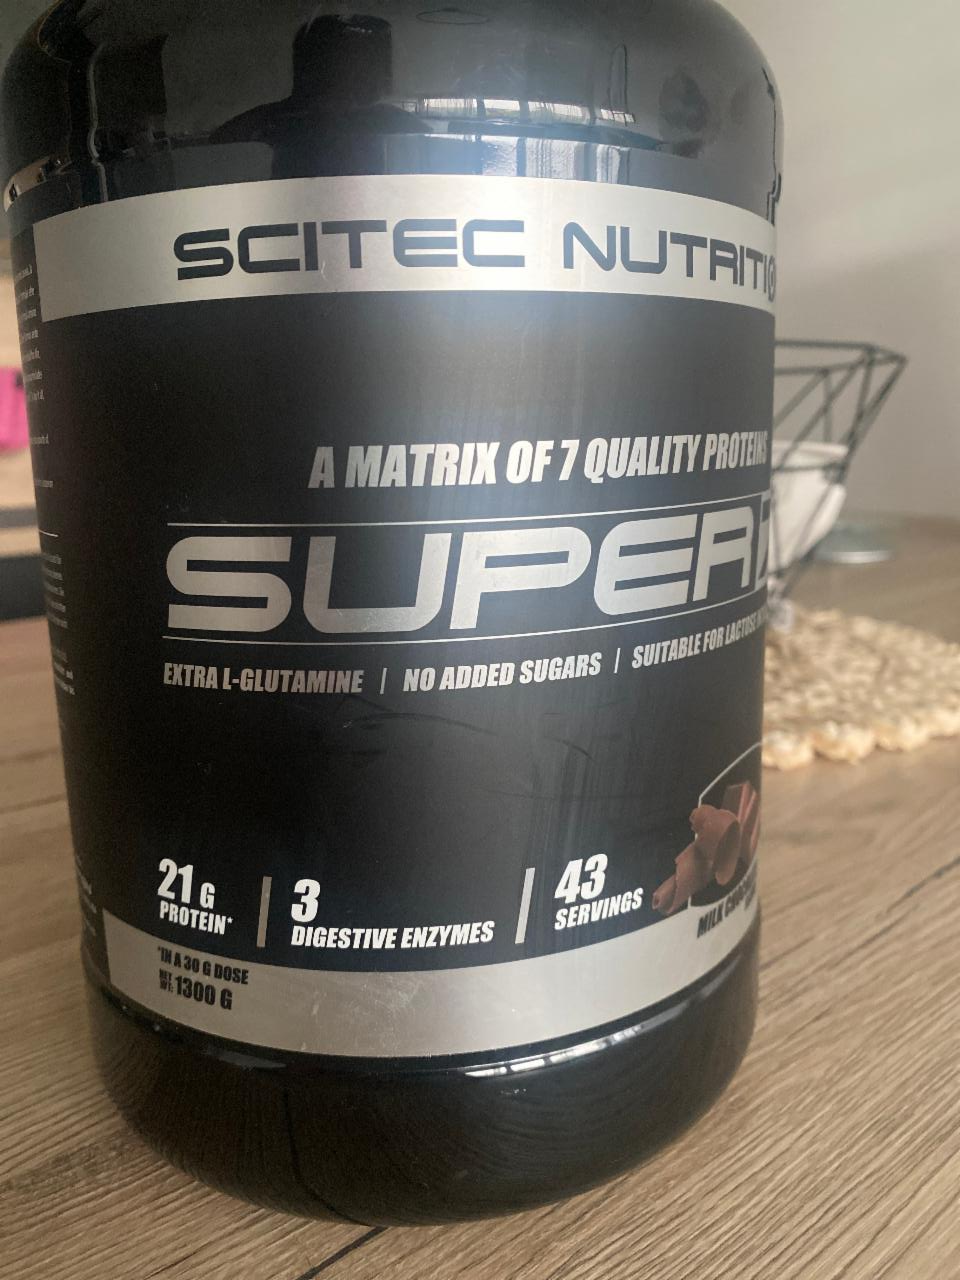 Fotografie - Stitec Nutrition A Matrix of quality protein Super 7